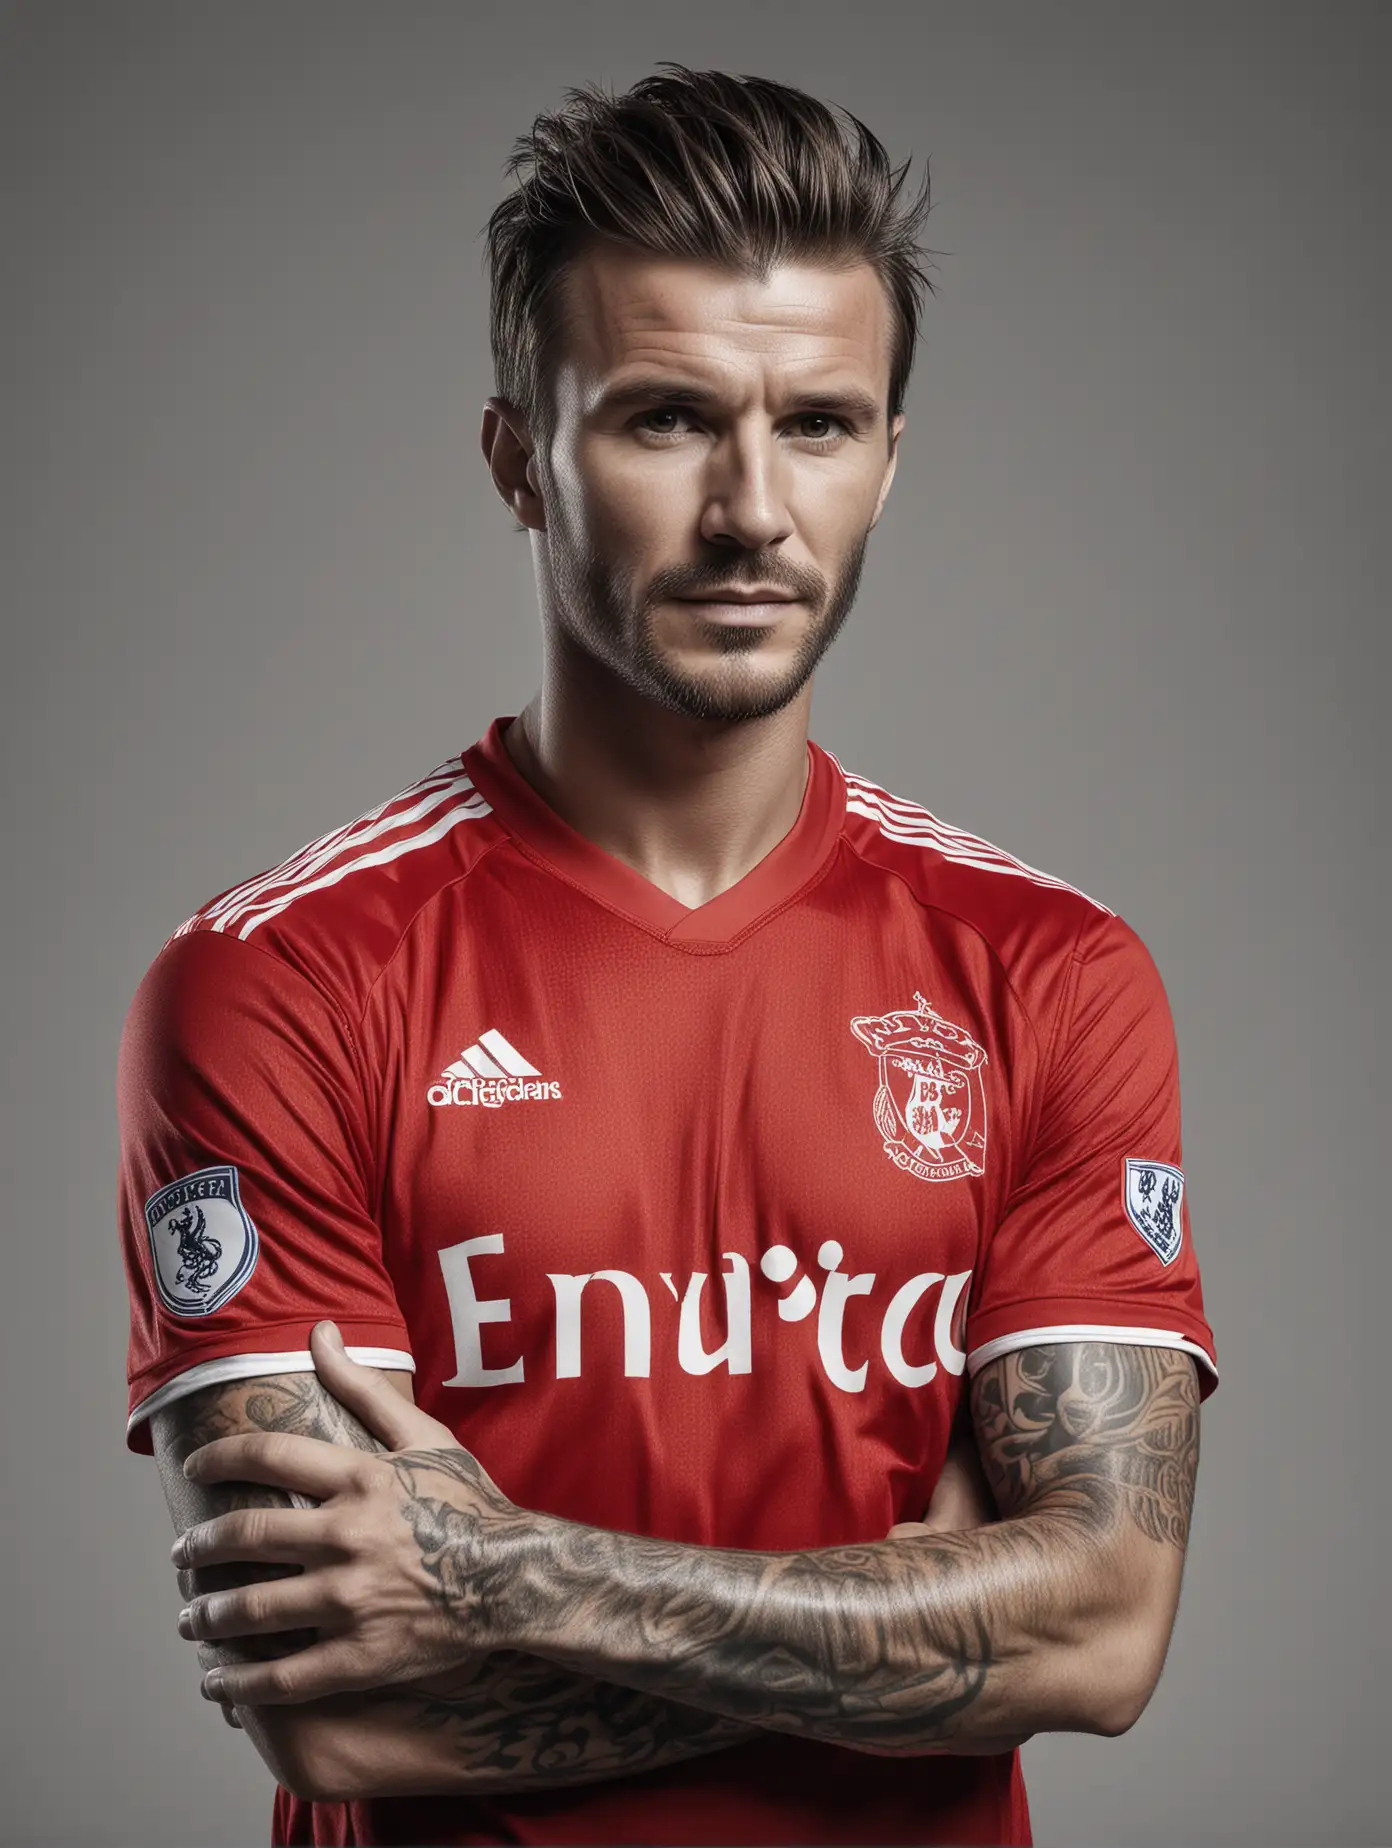 David Beckham Portrait in Red Football Jersey Monochrome HalfLength 4K Ultra HD Image